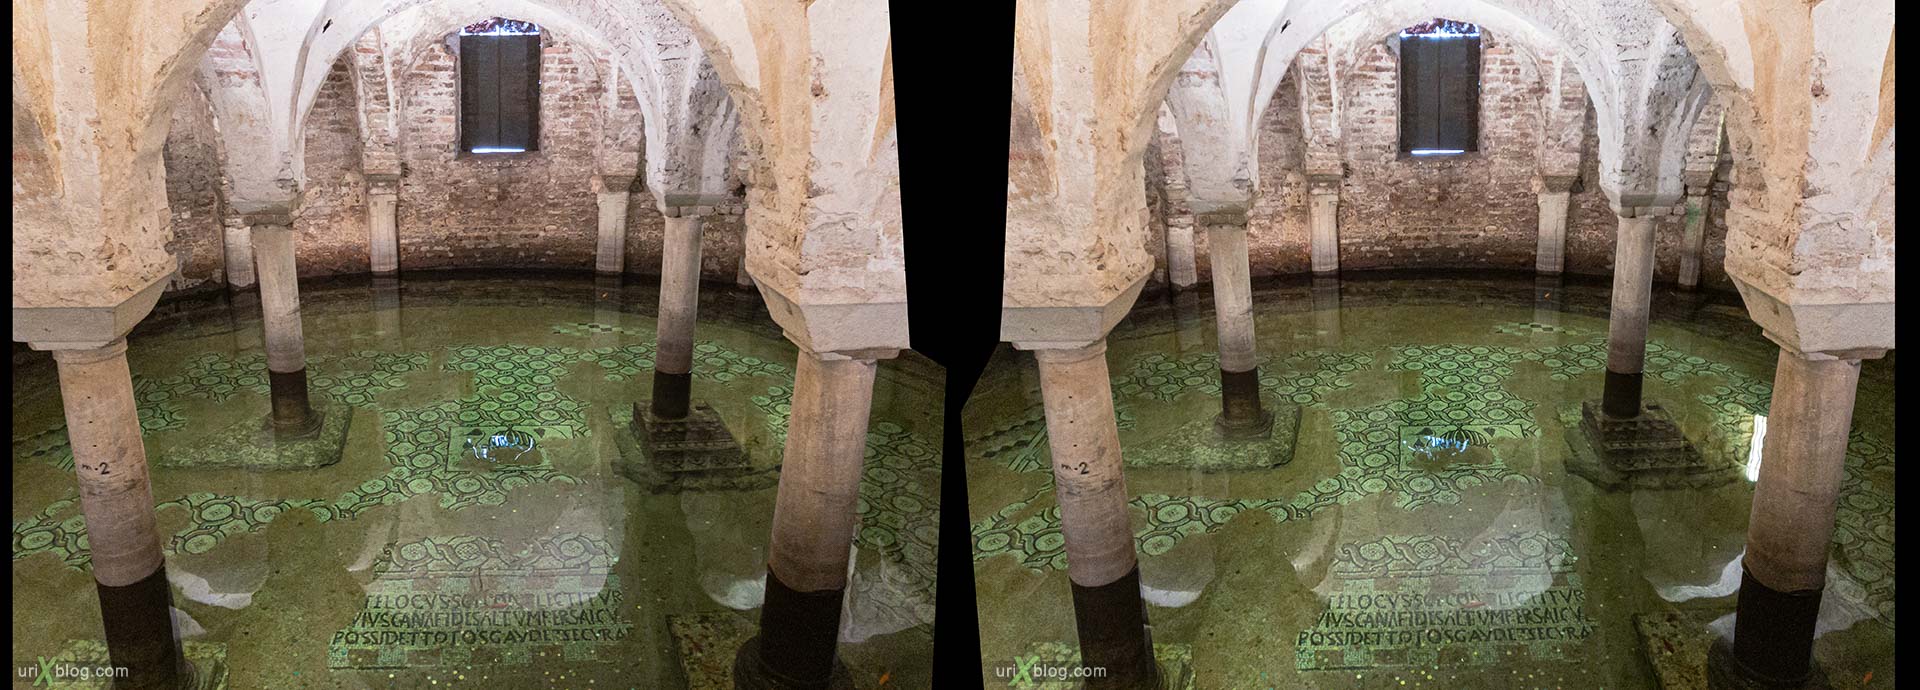 flooded crypt, Basilica of Saint Francis, mosaic, Ravenna, Italy, 3D, stereo pair, cross-eyed, crossview, cross view stereo pair, stereoscopic